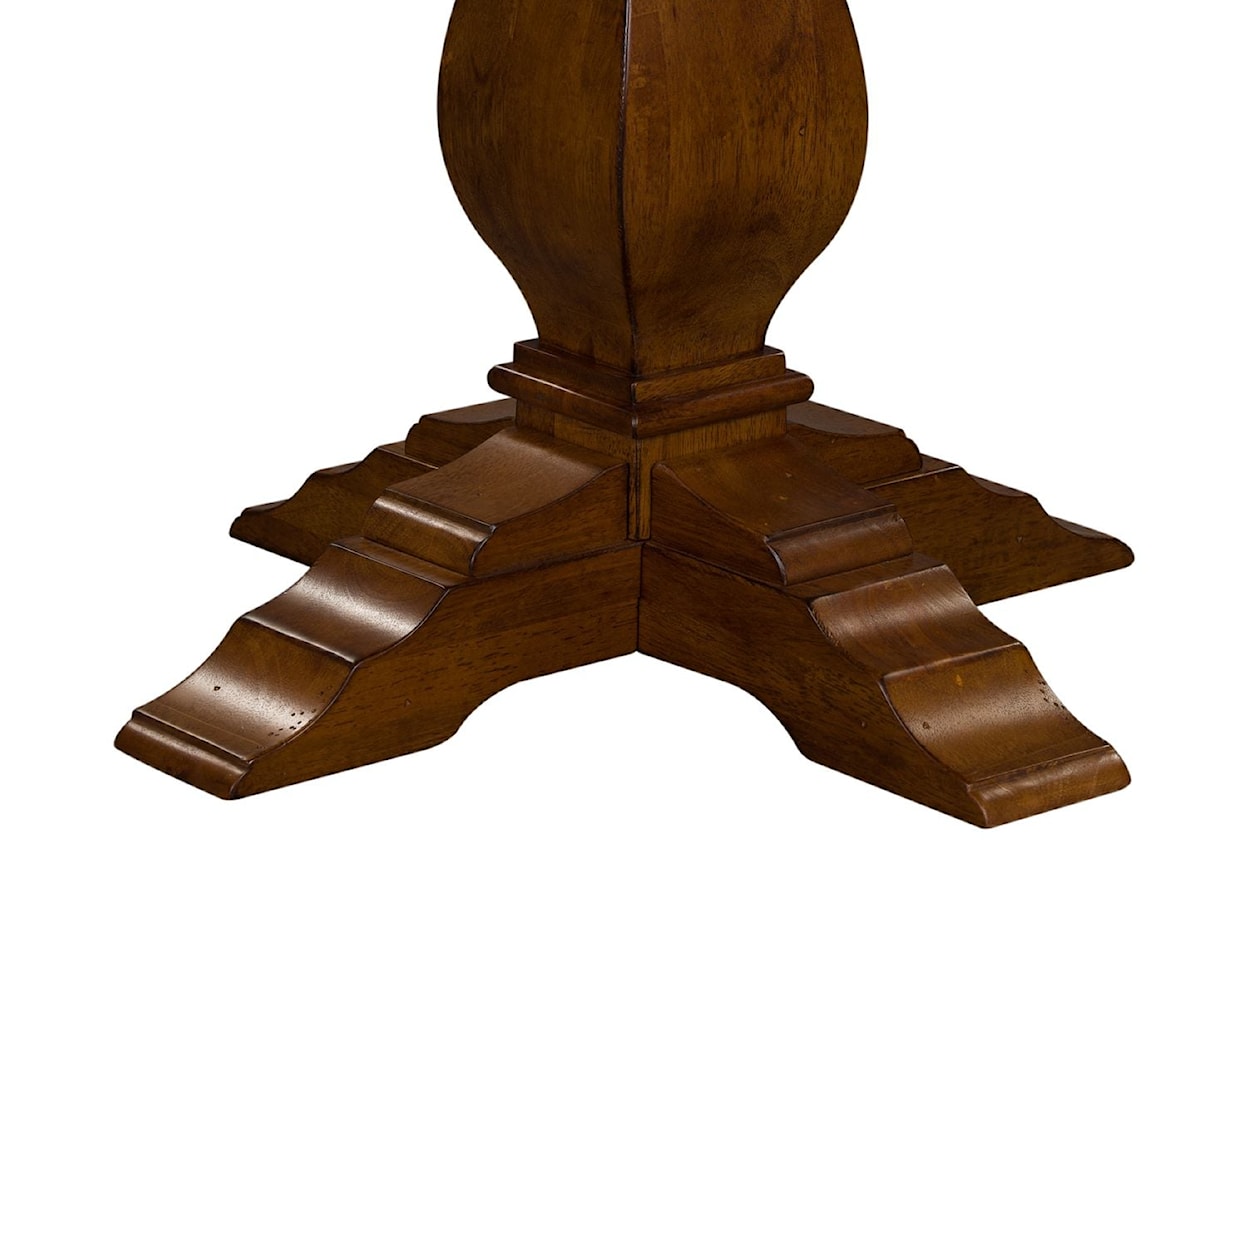 Liberty Furniture Creations II Drop Leaf Pedestal Table